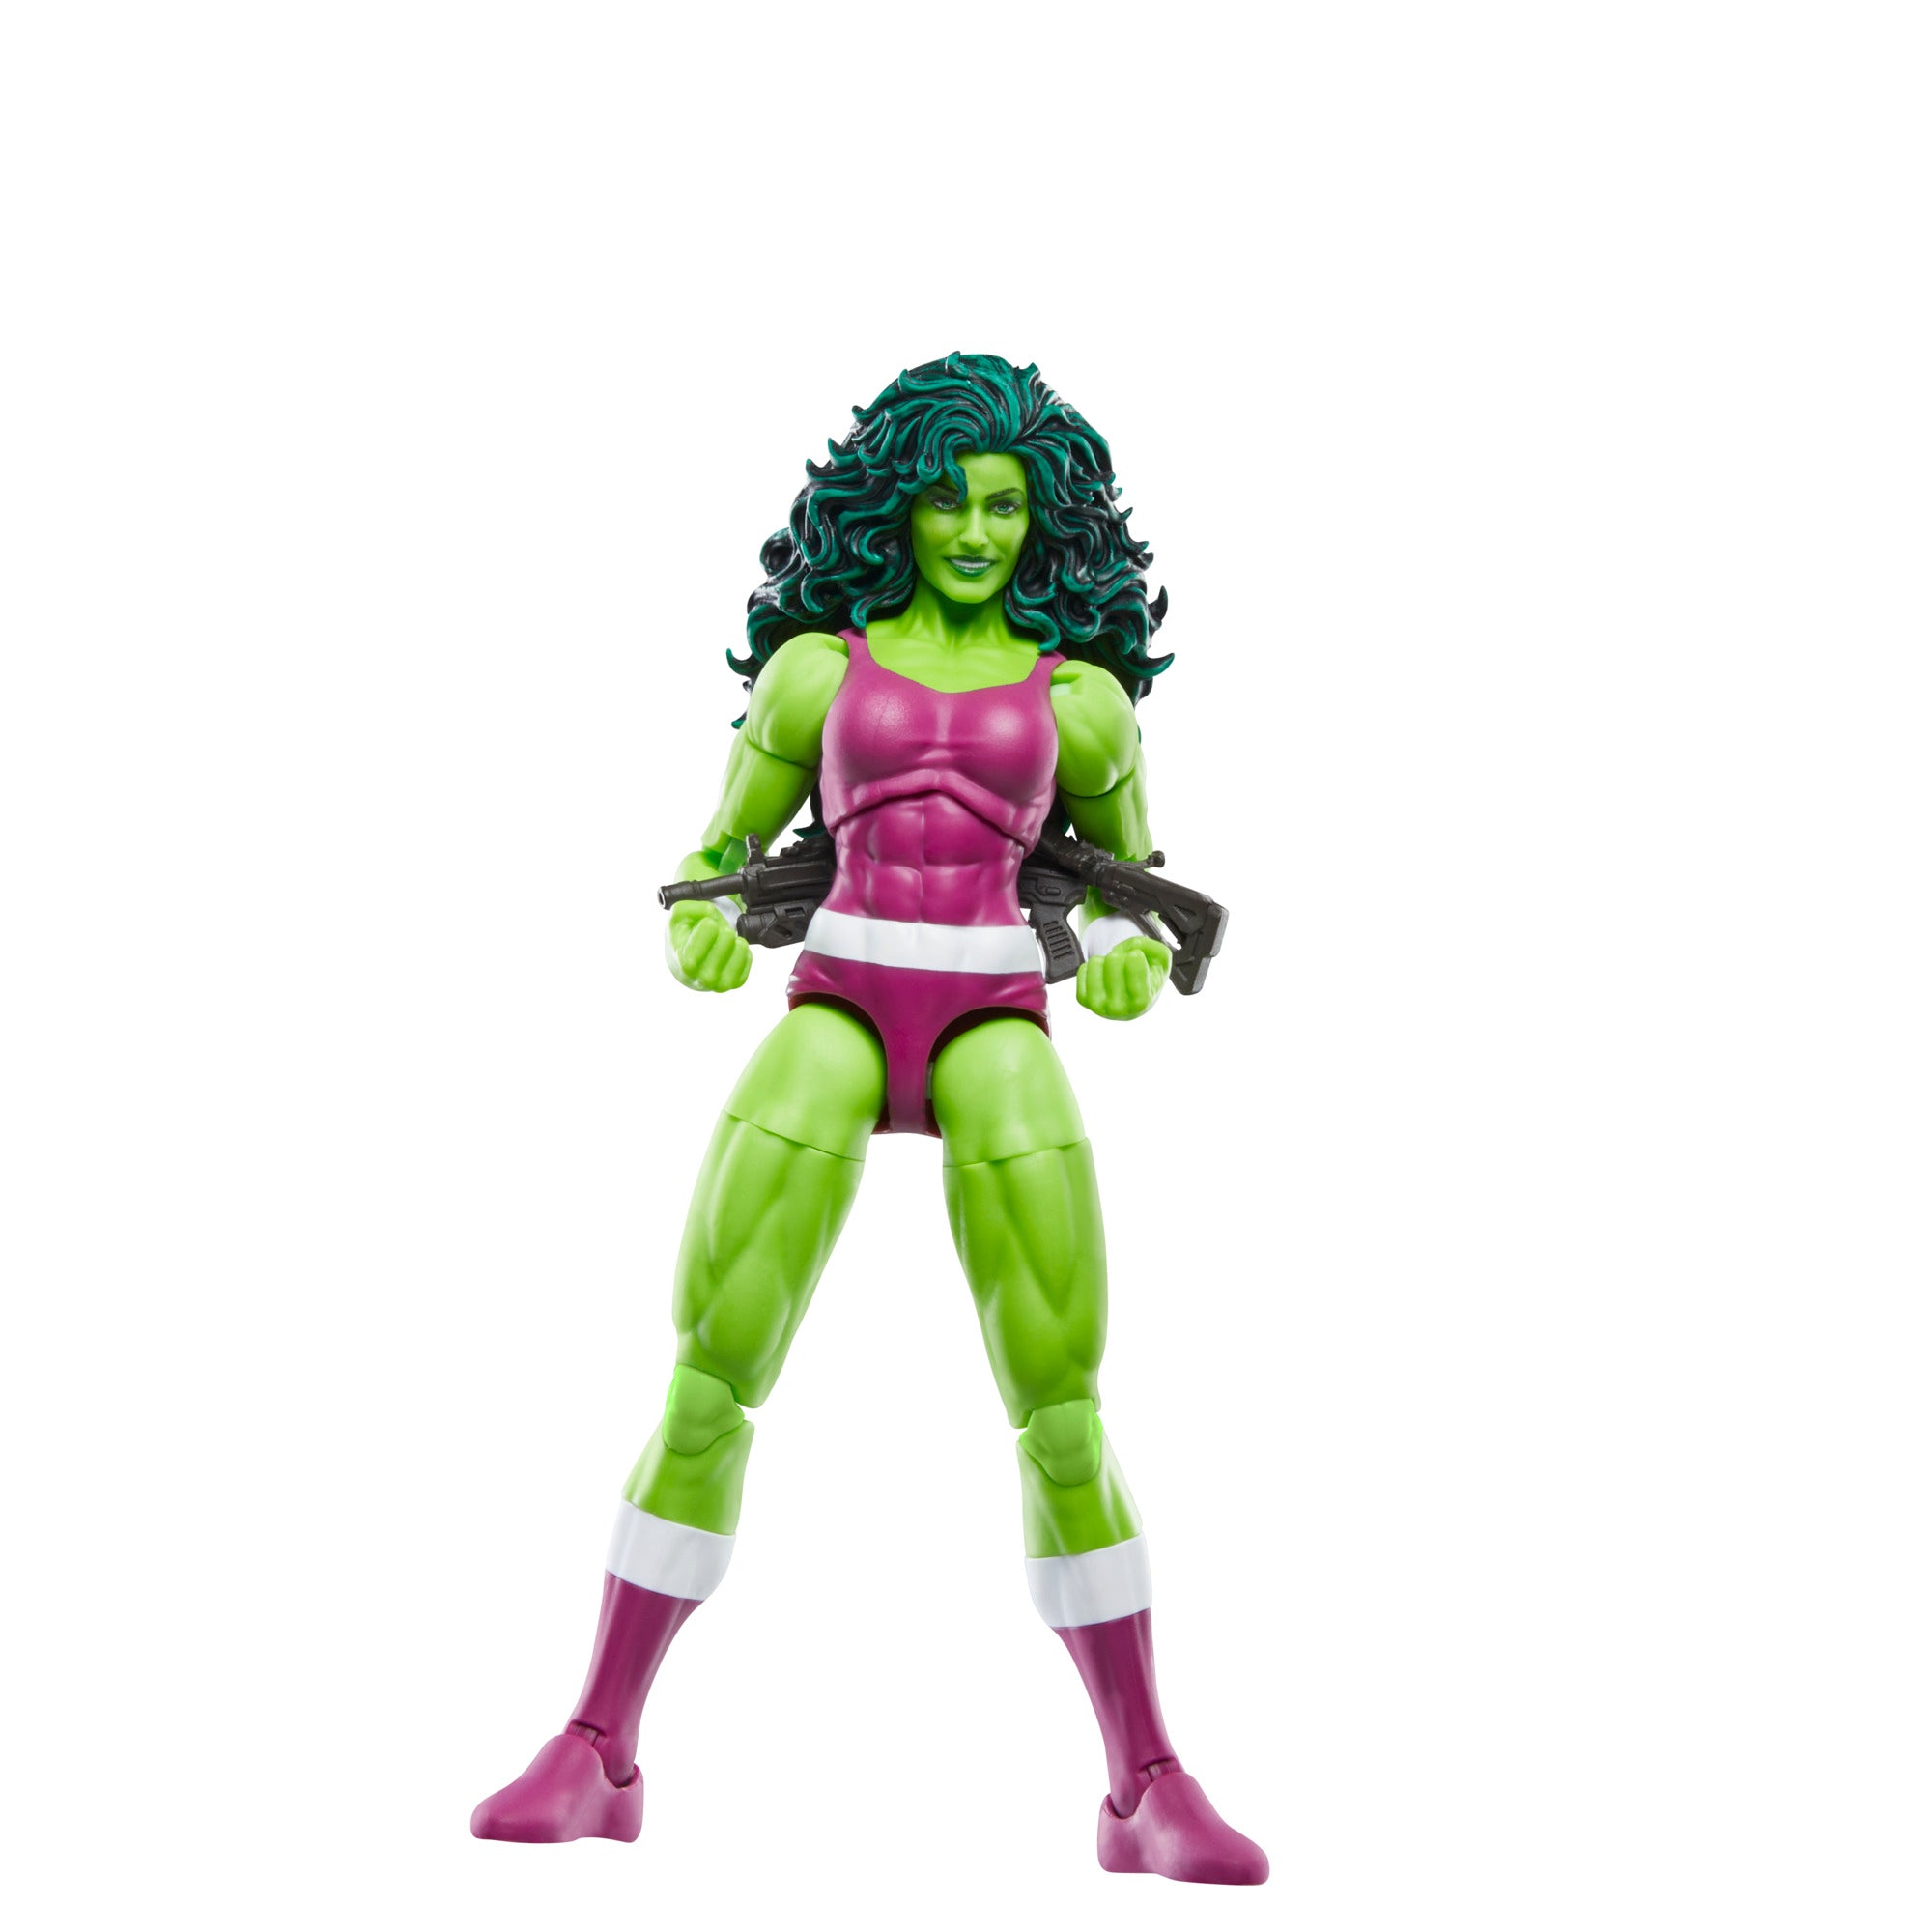 Marvel Legends Classic: Iron Man - She Hulk